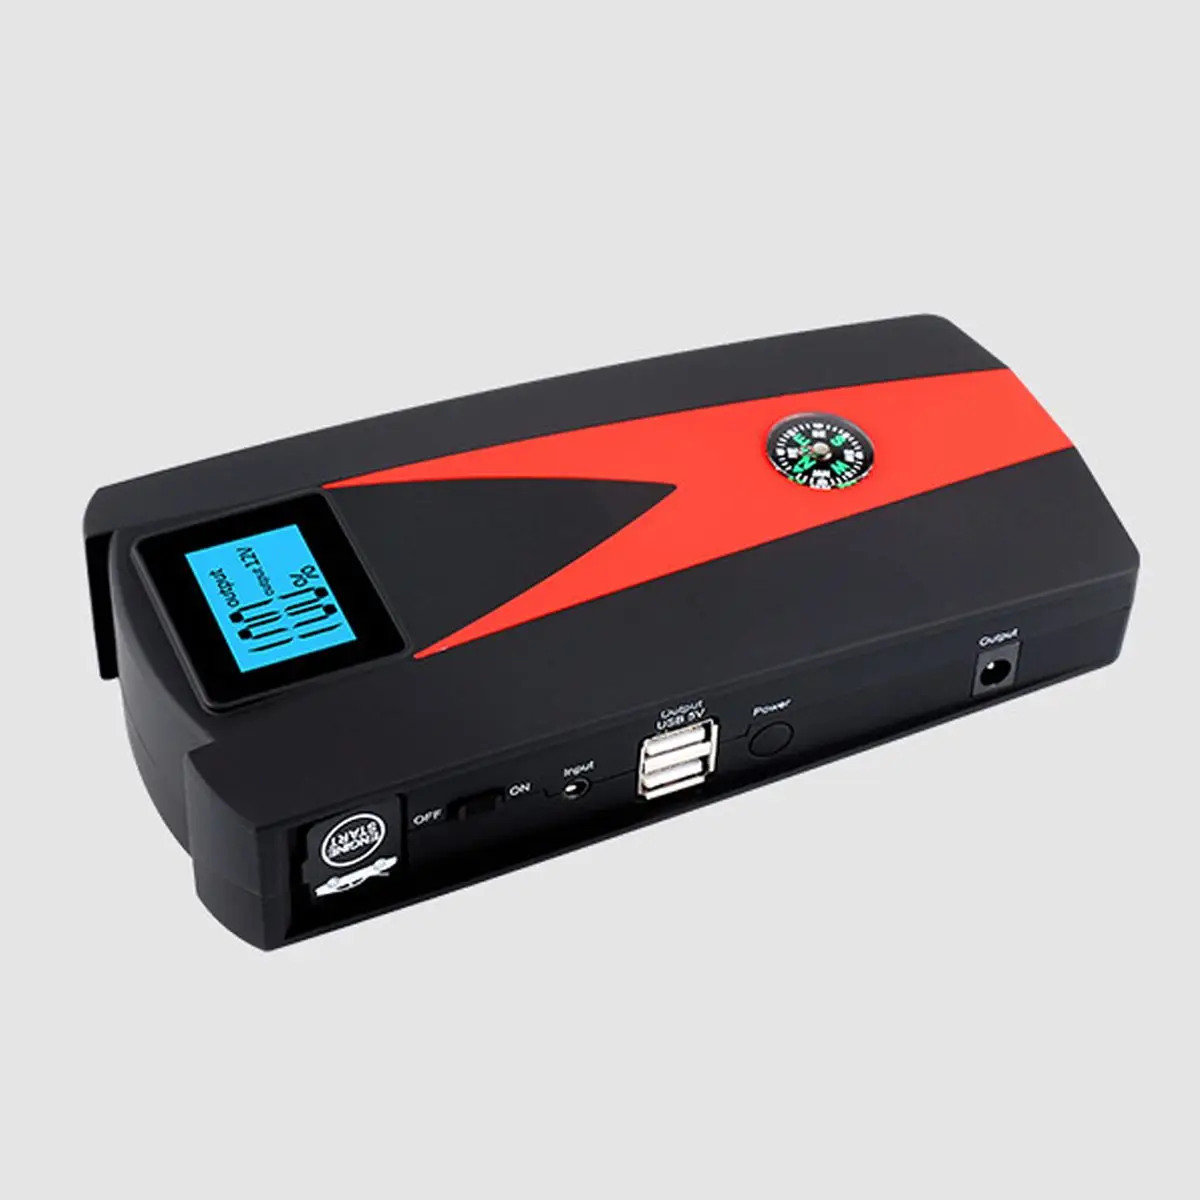 Audew 99900 mAh Portable Car battery Jump Starter w/ LED Display & Flashlight